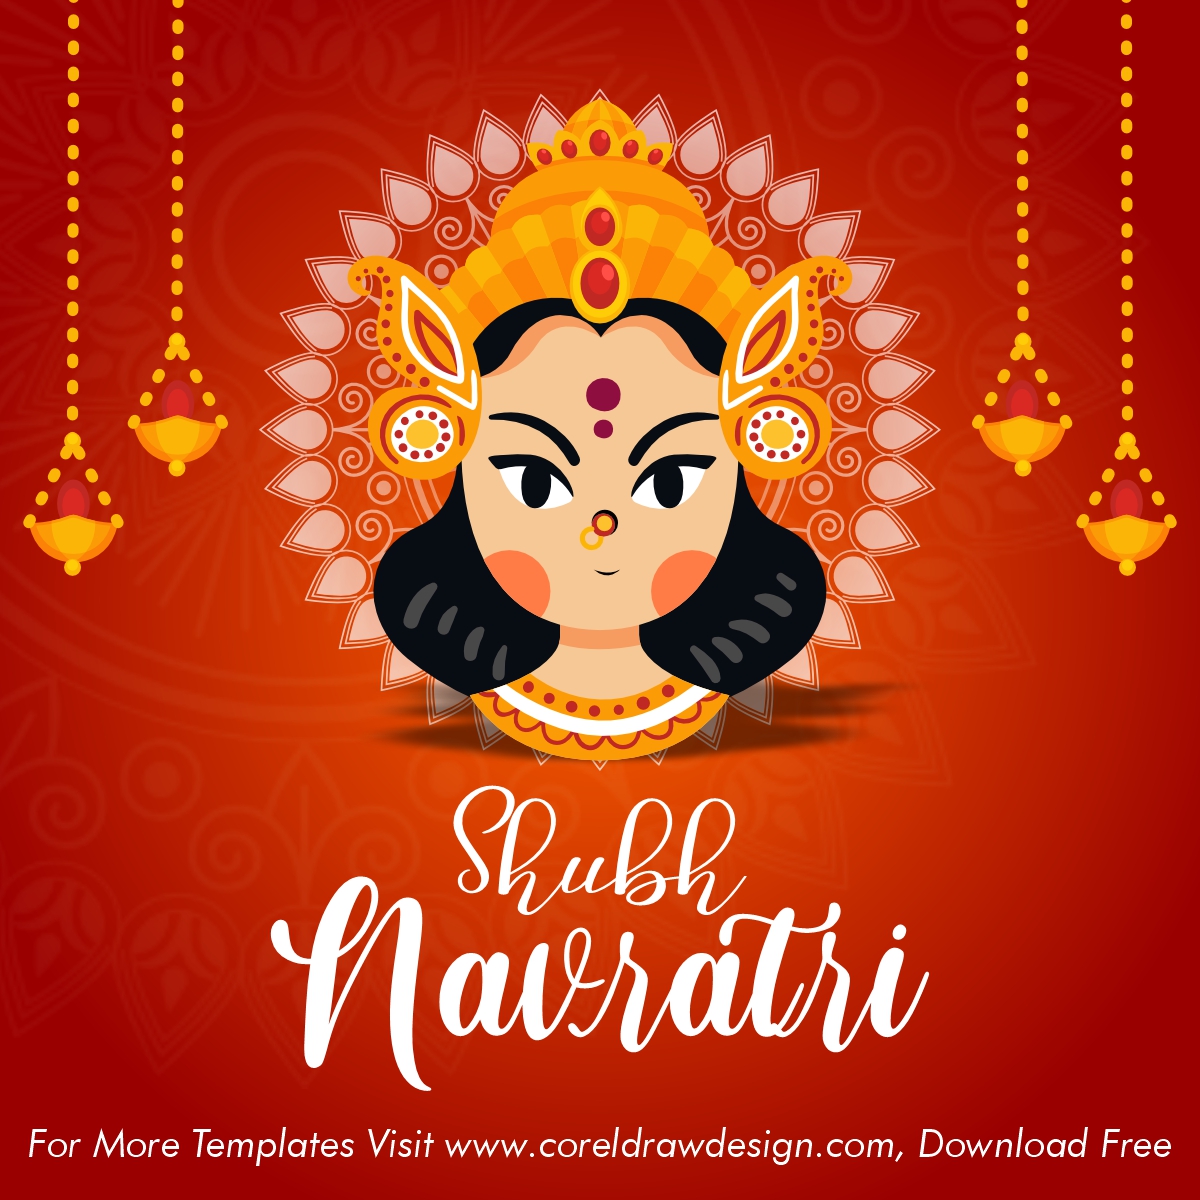 Download Happy Navratri Greeting Download From CorelDrawdesign ...